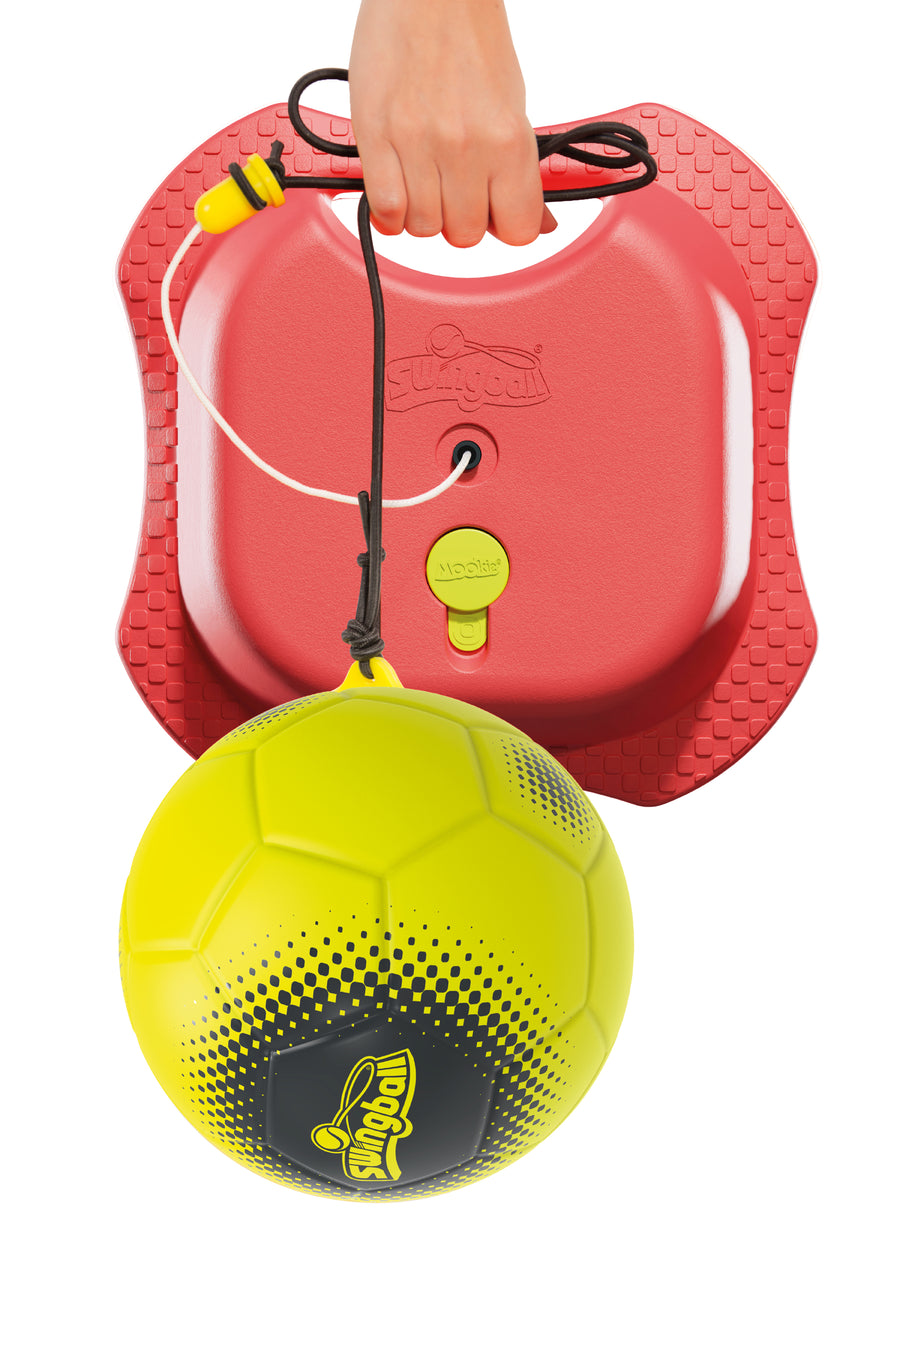 Swingball reflex soccer